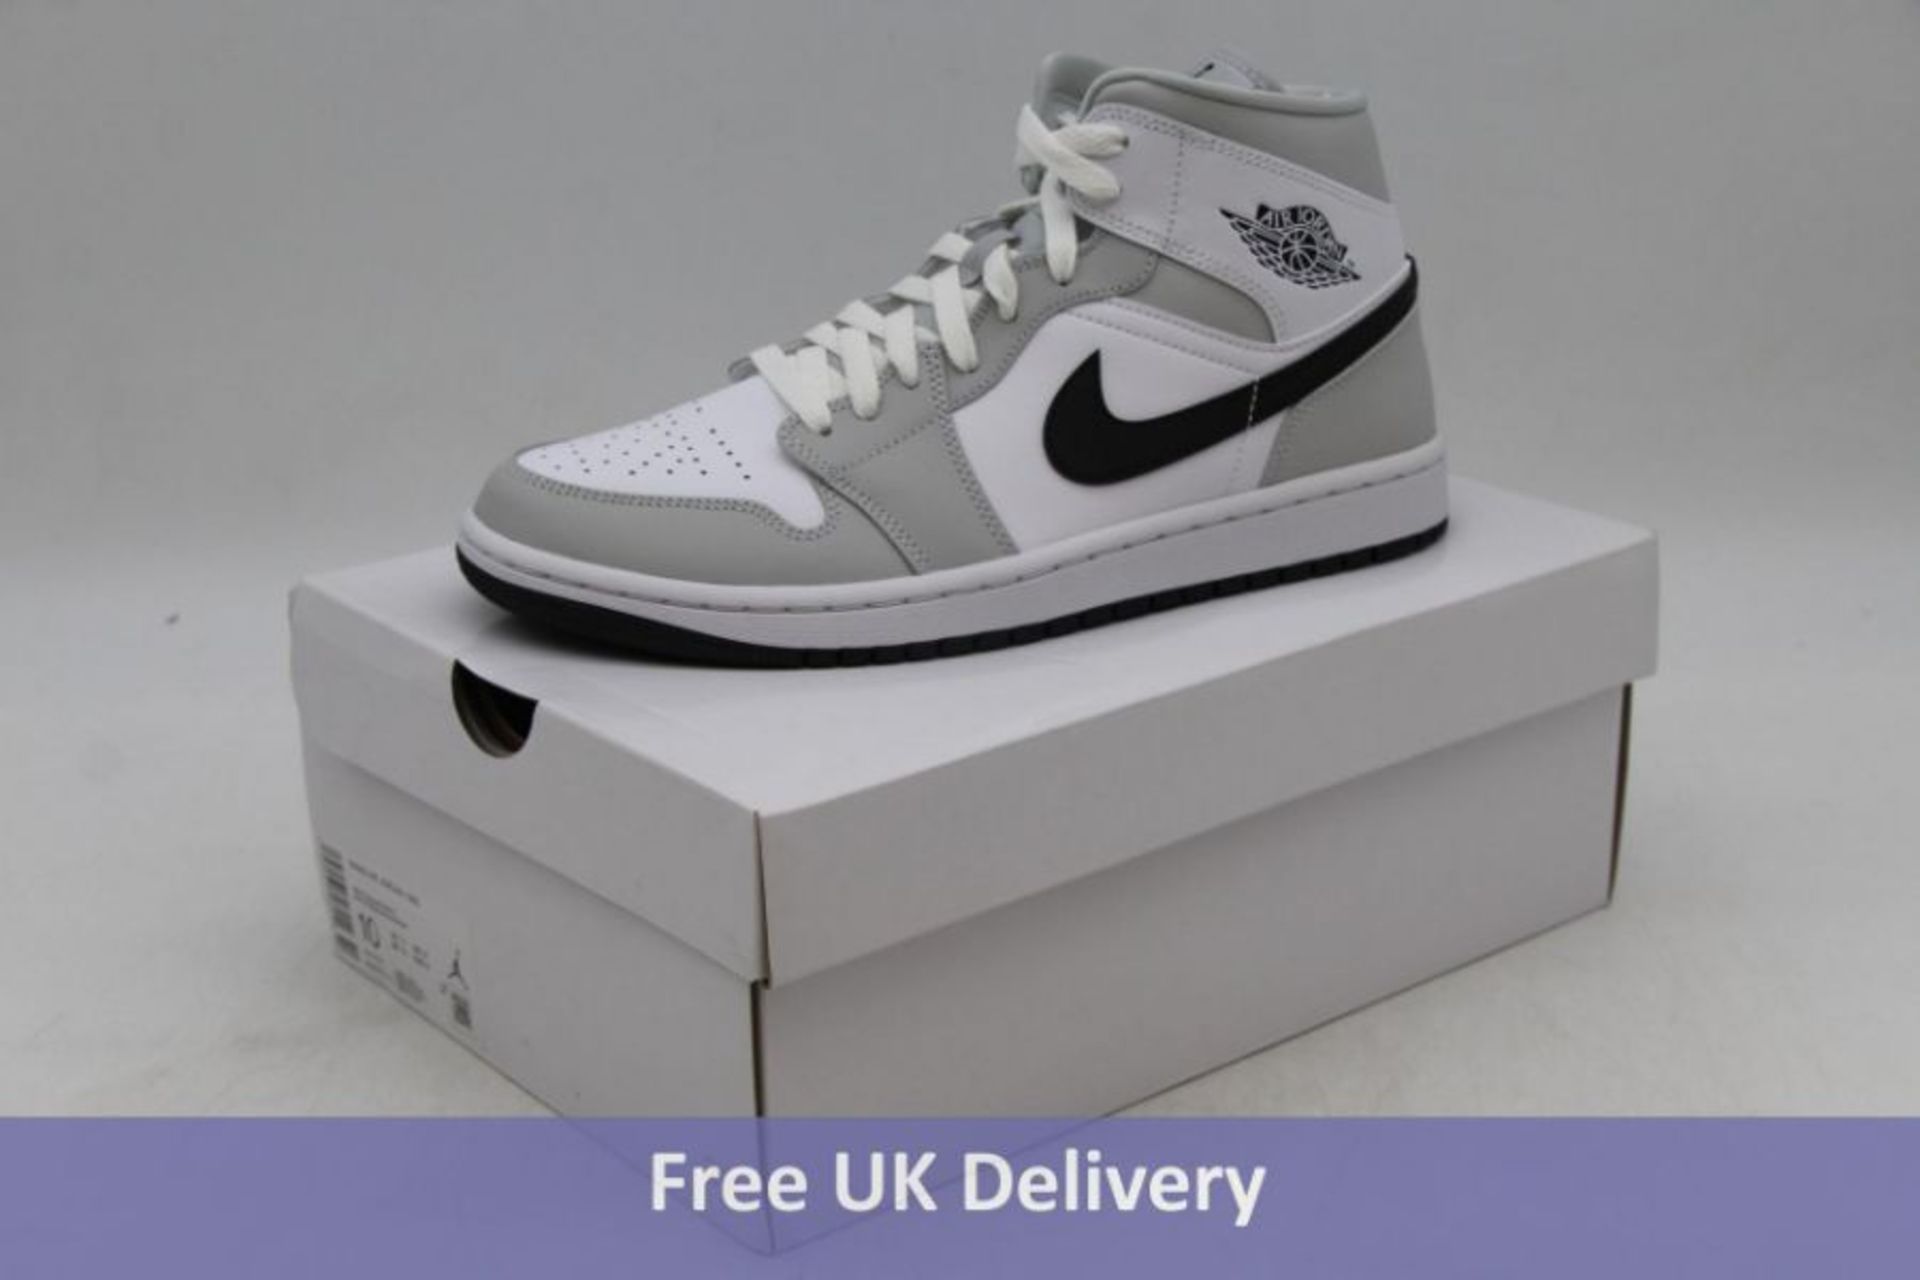 Nike Air Jordan 1 Mid Trainers, White/Grey/Black, UK 7.5